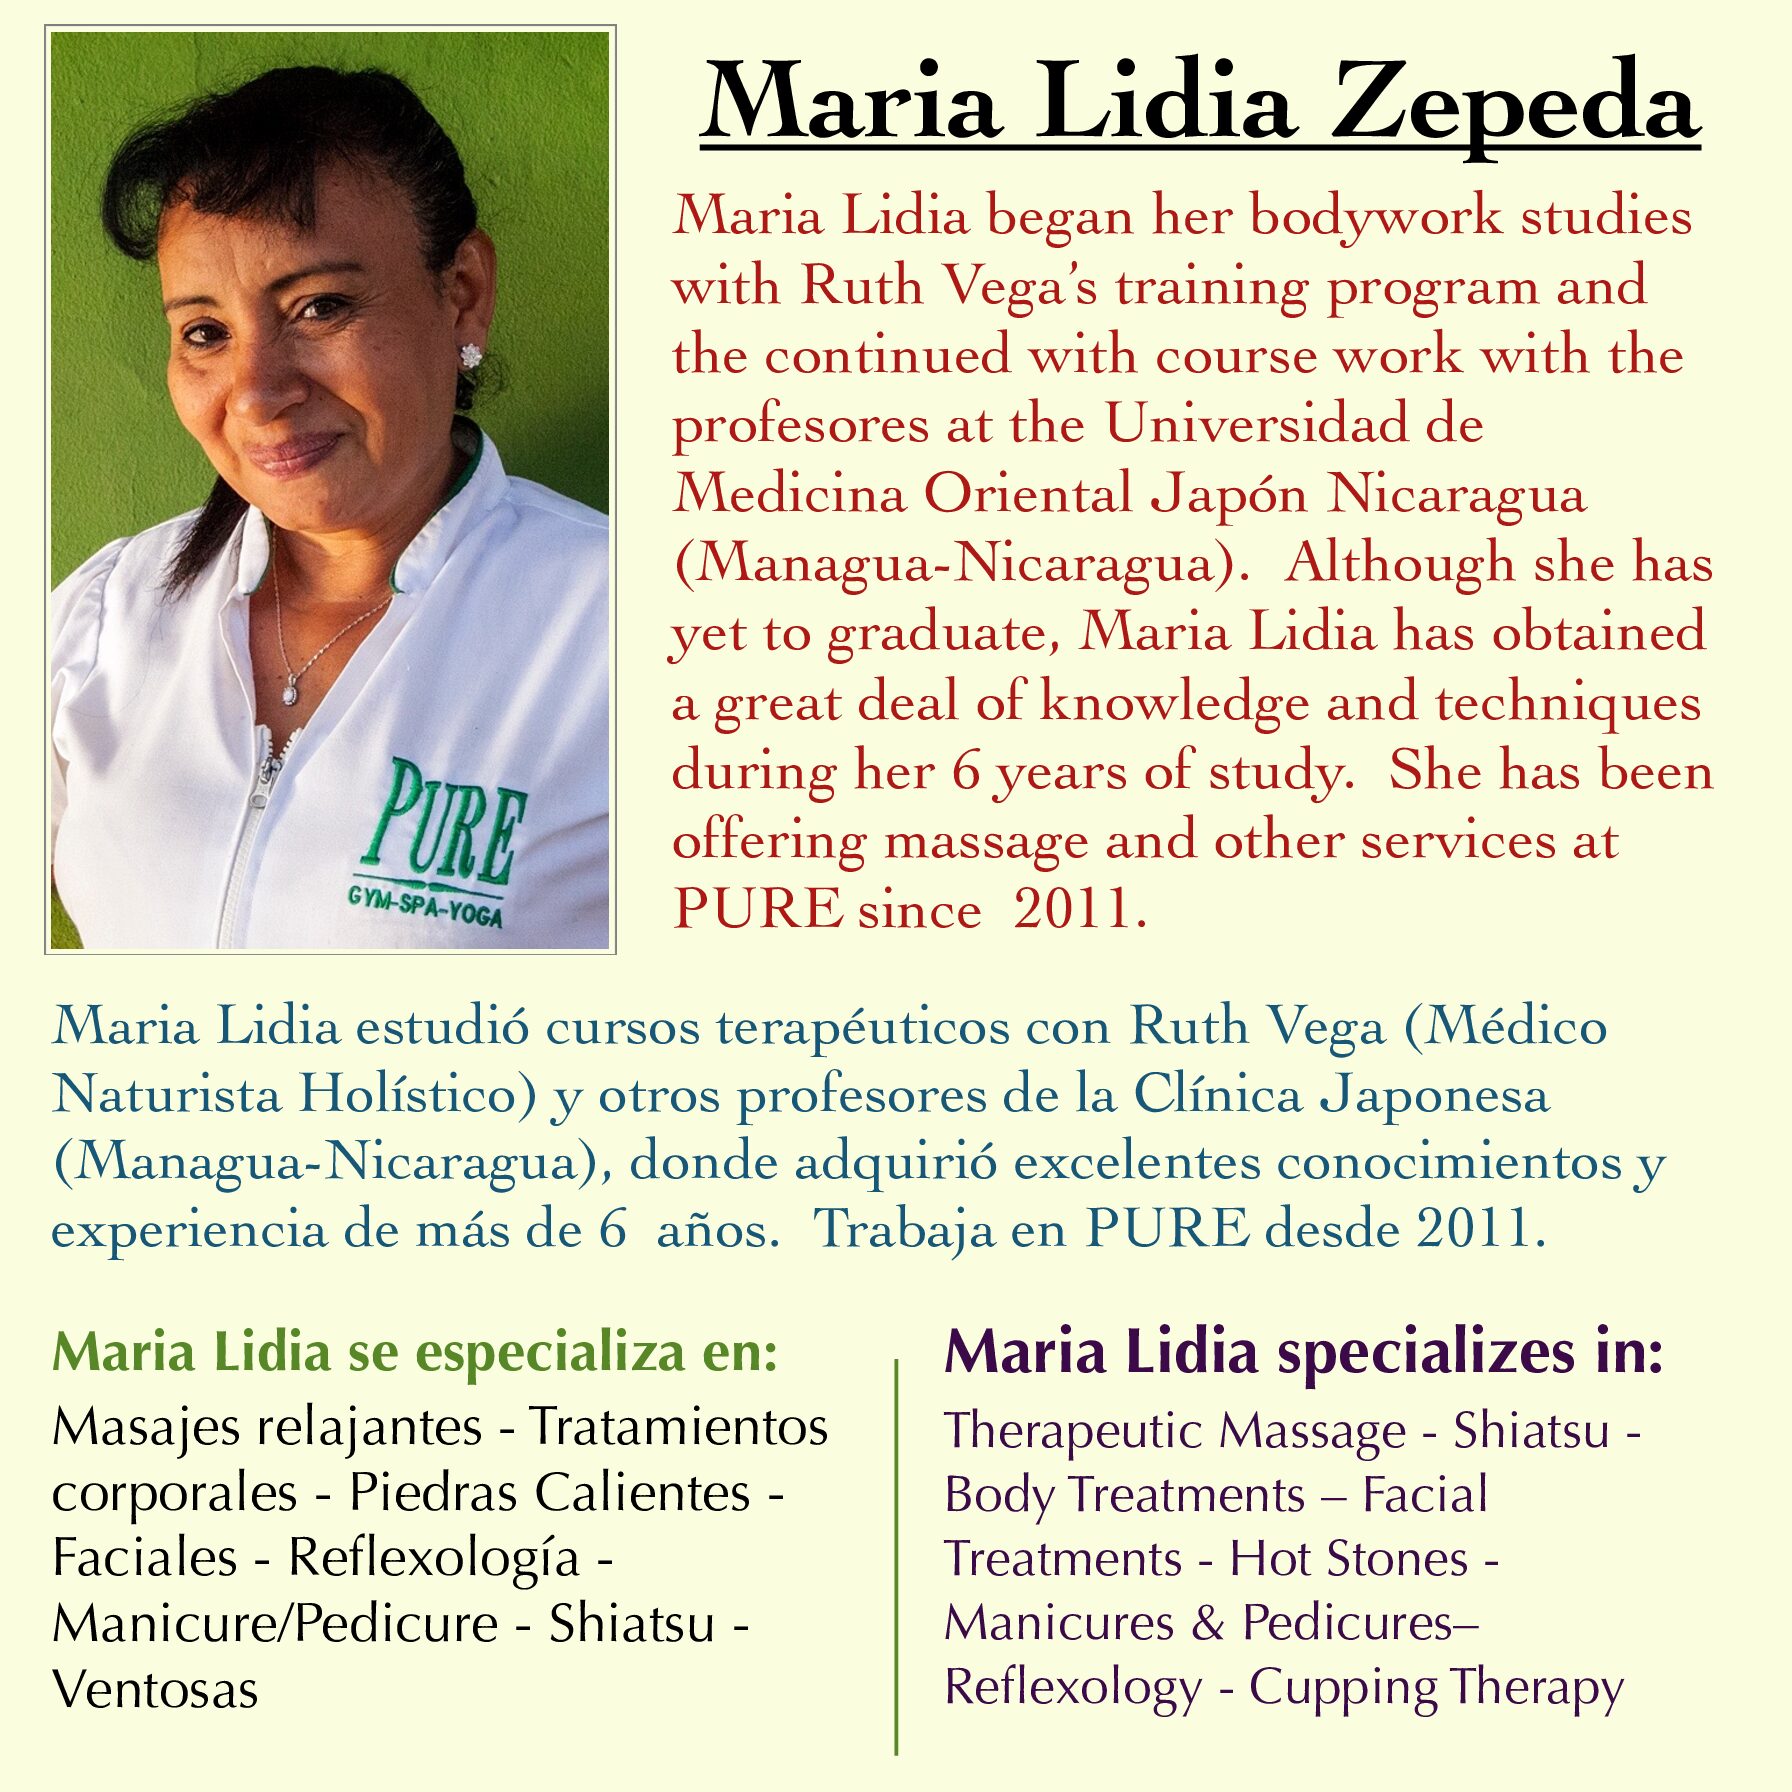 Maria Lidia Zepeda